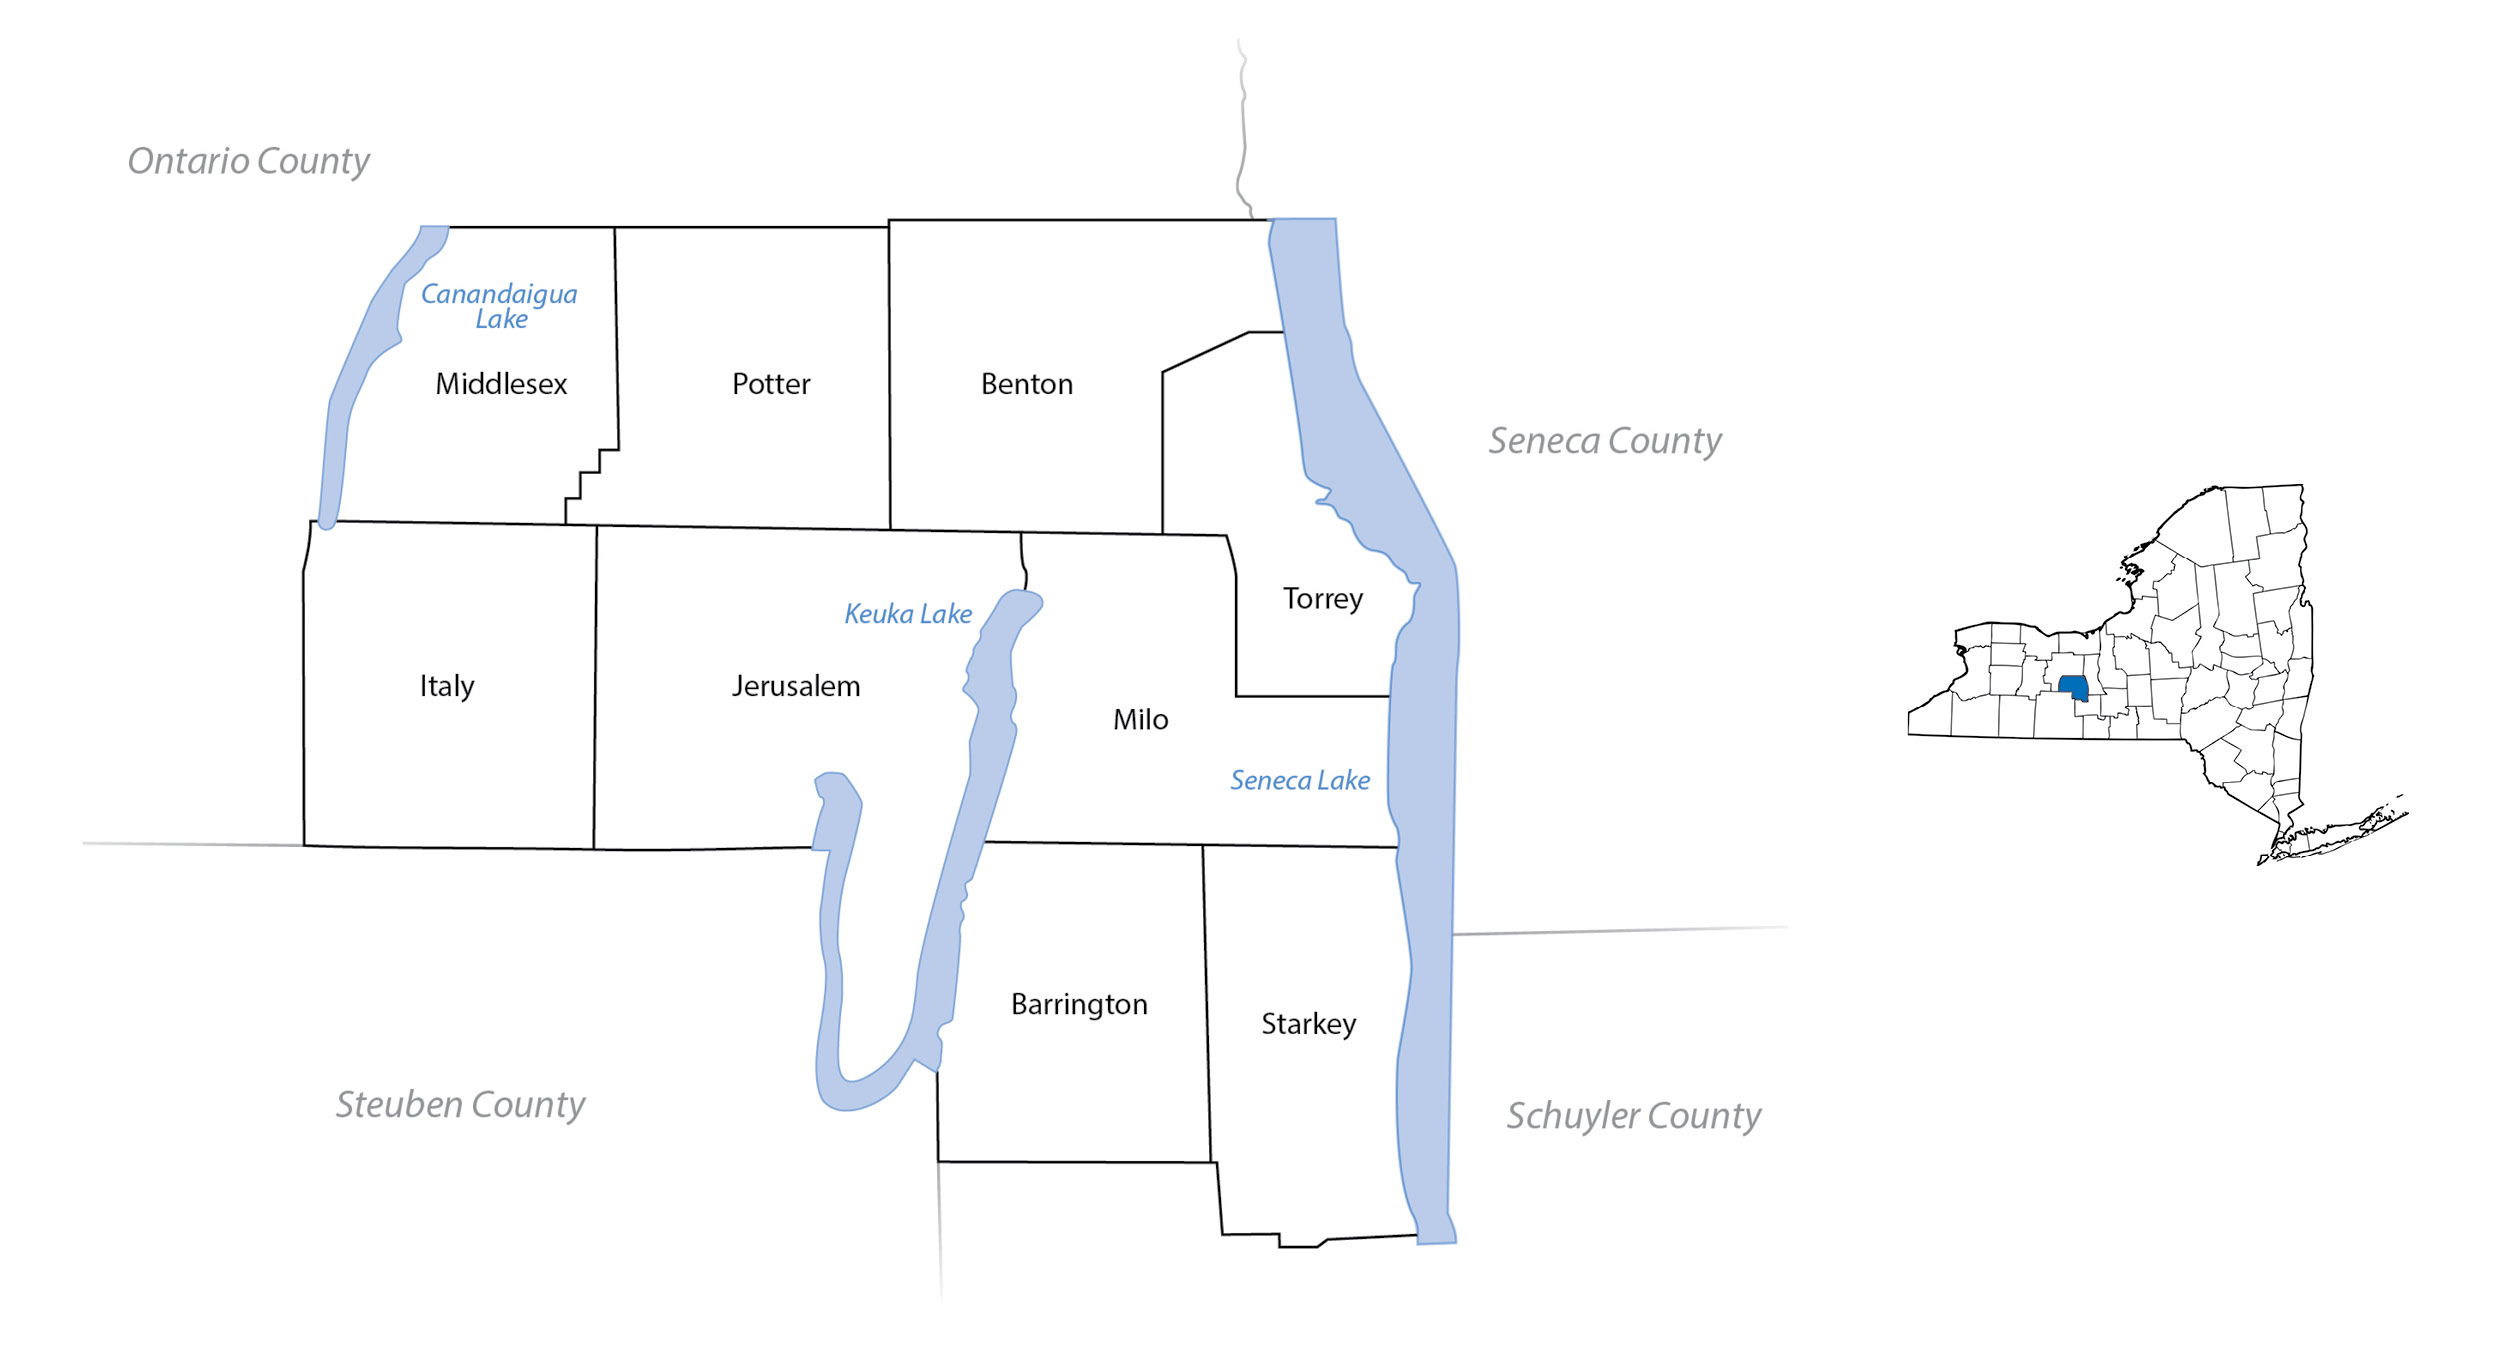 Yates County Map